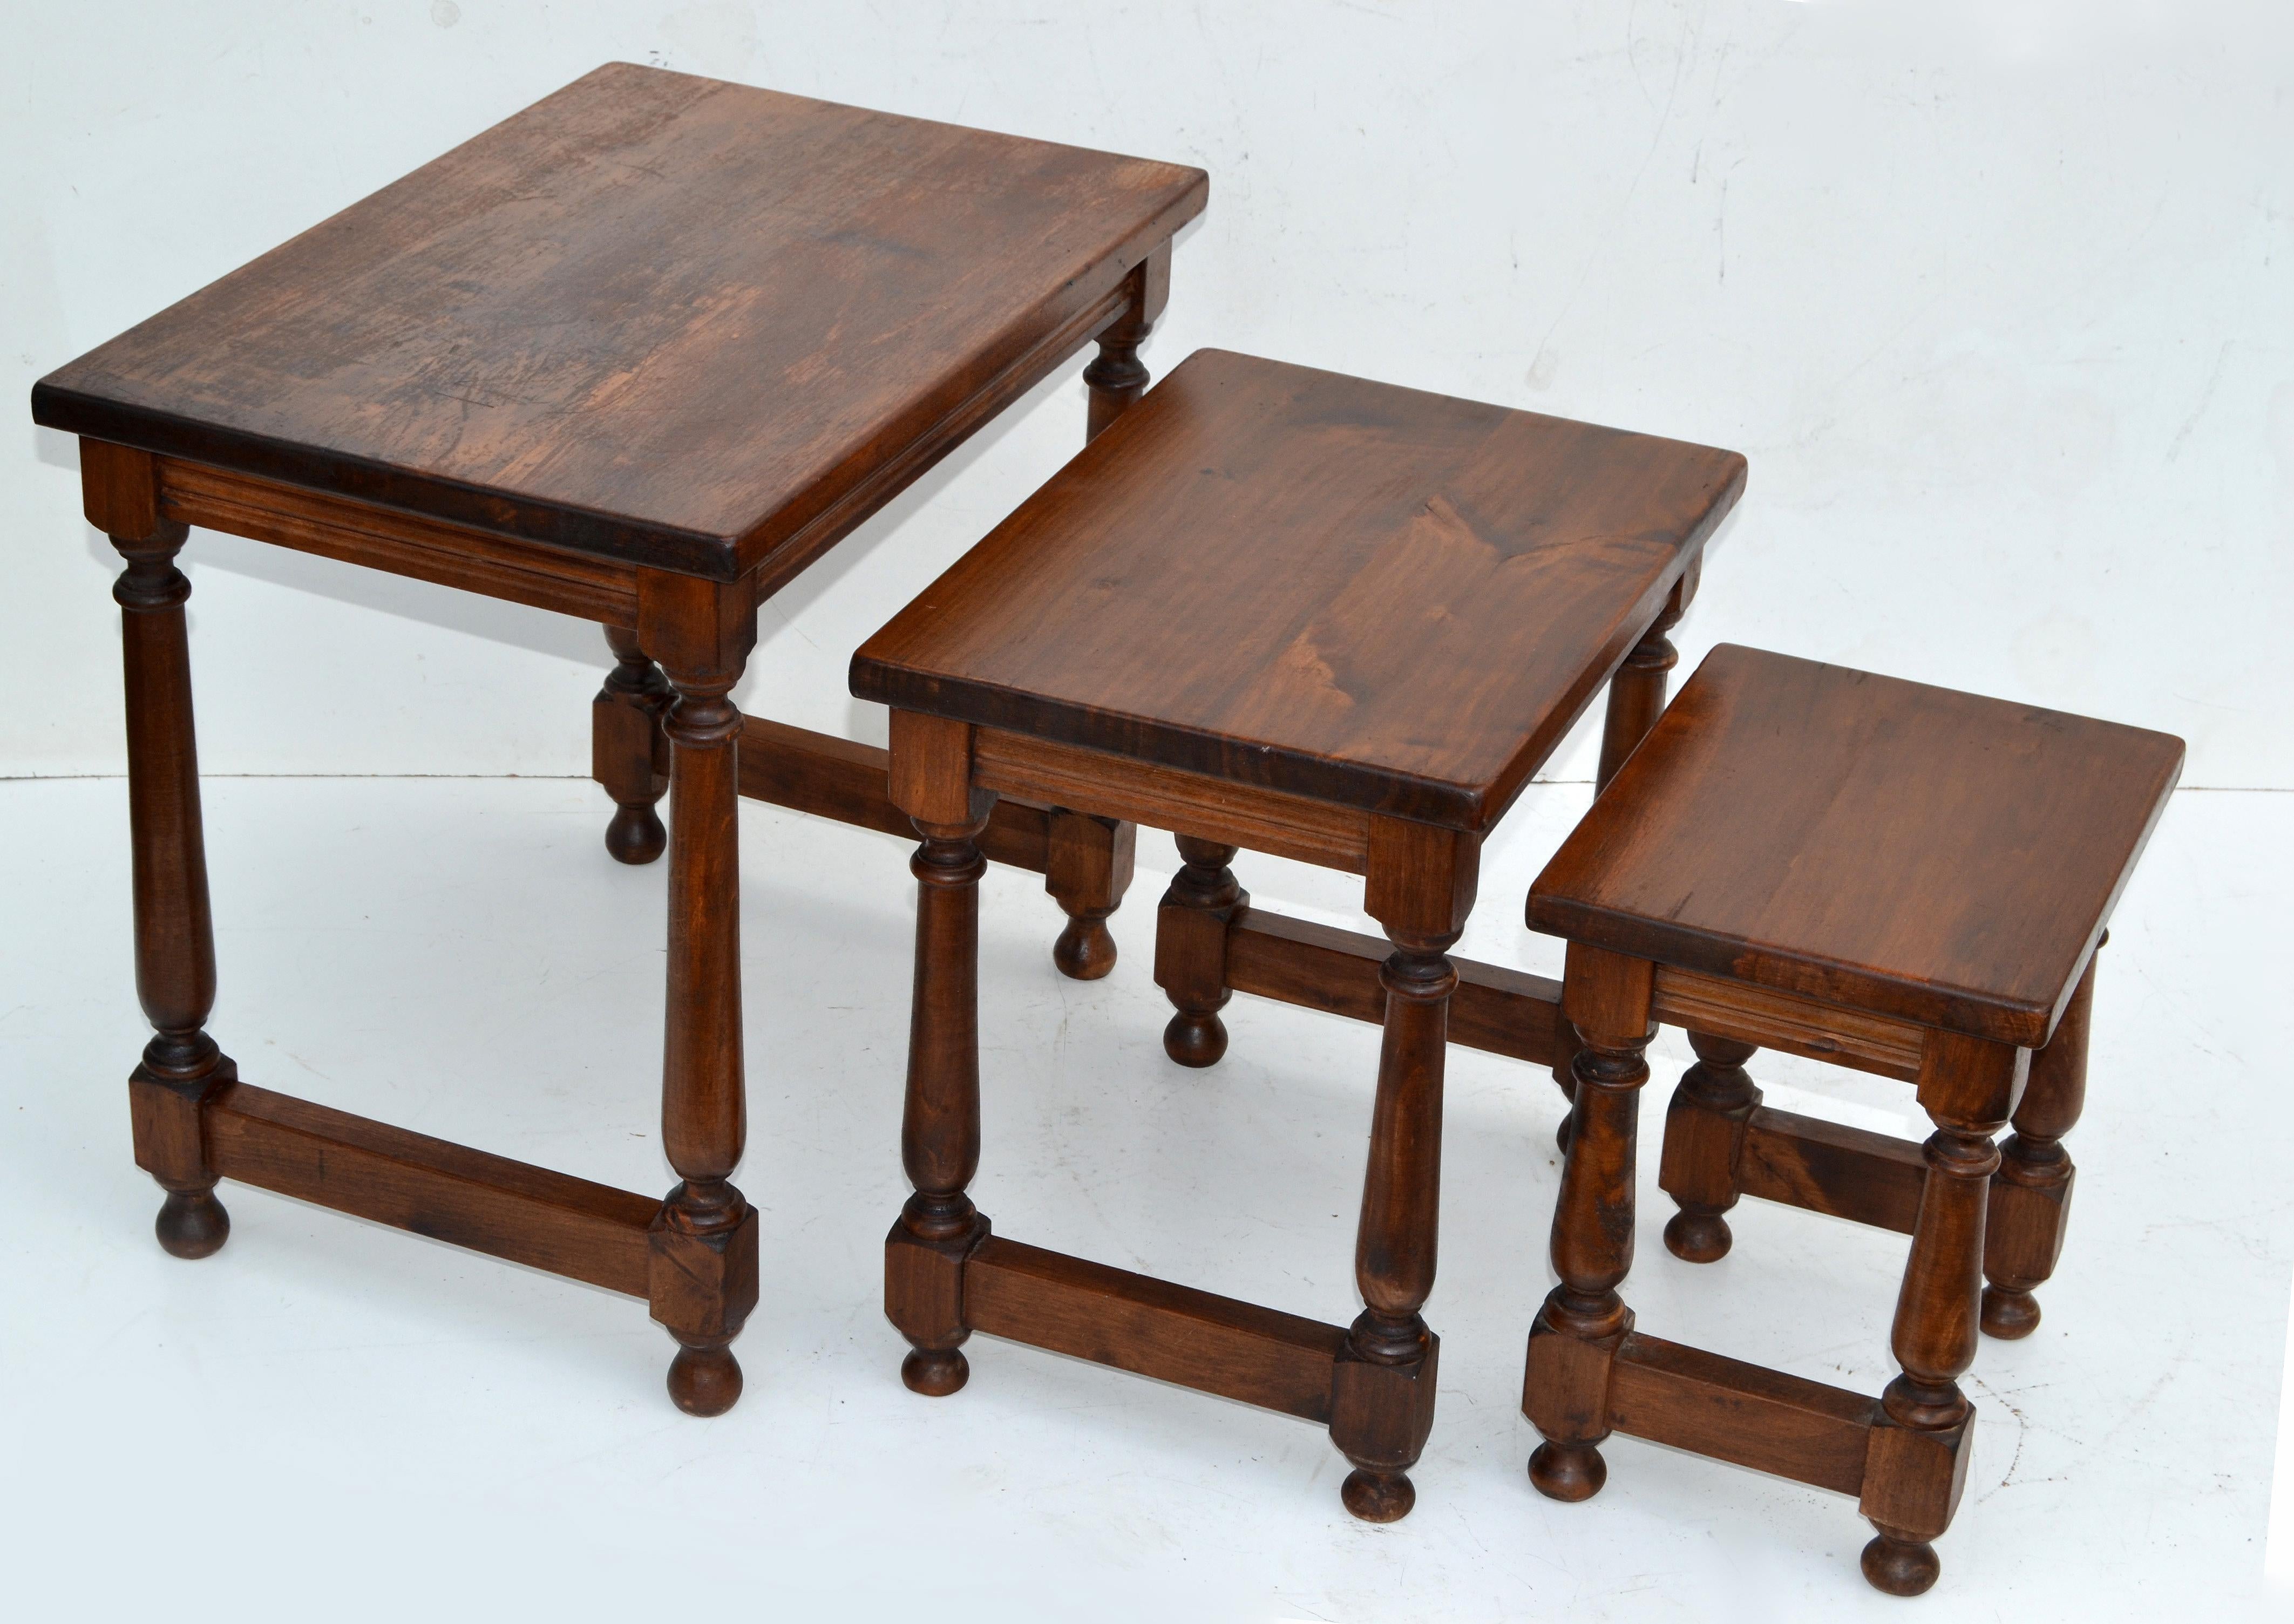 3 legged antique table